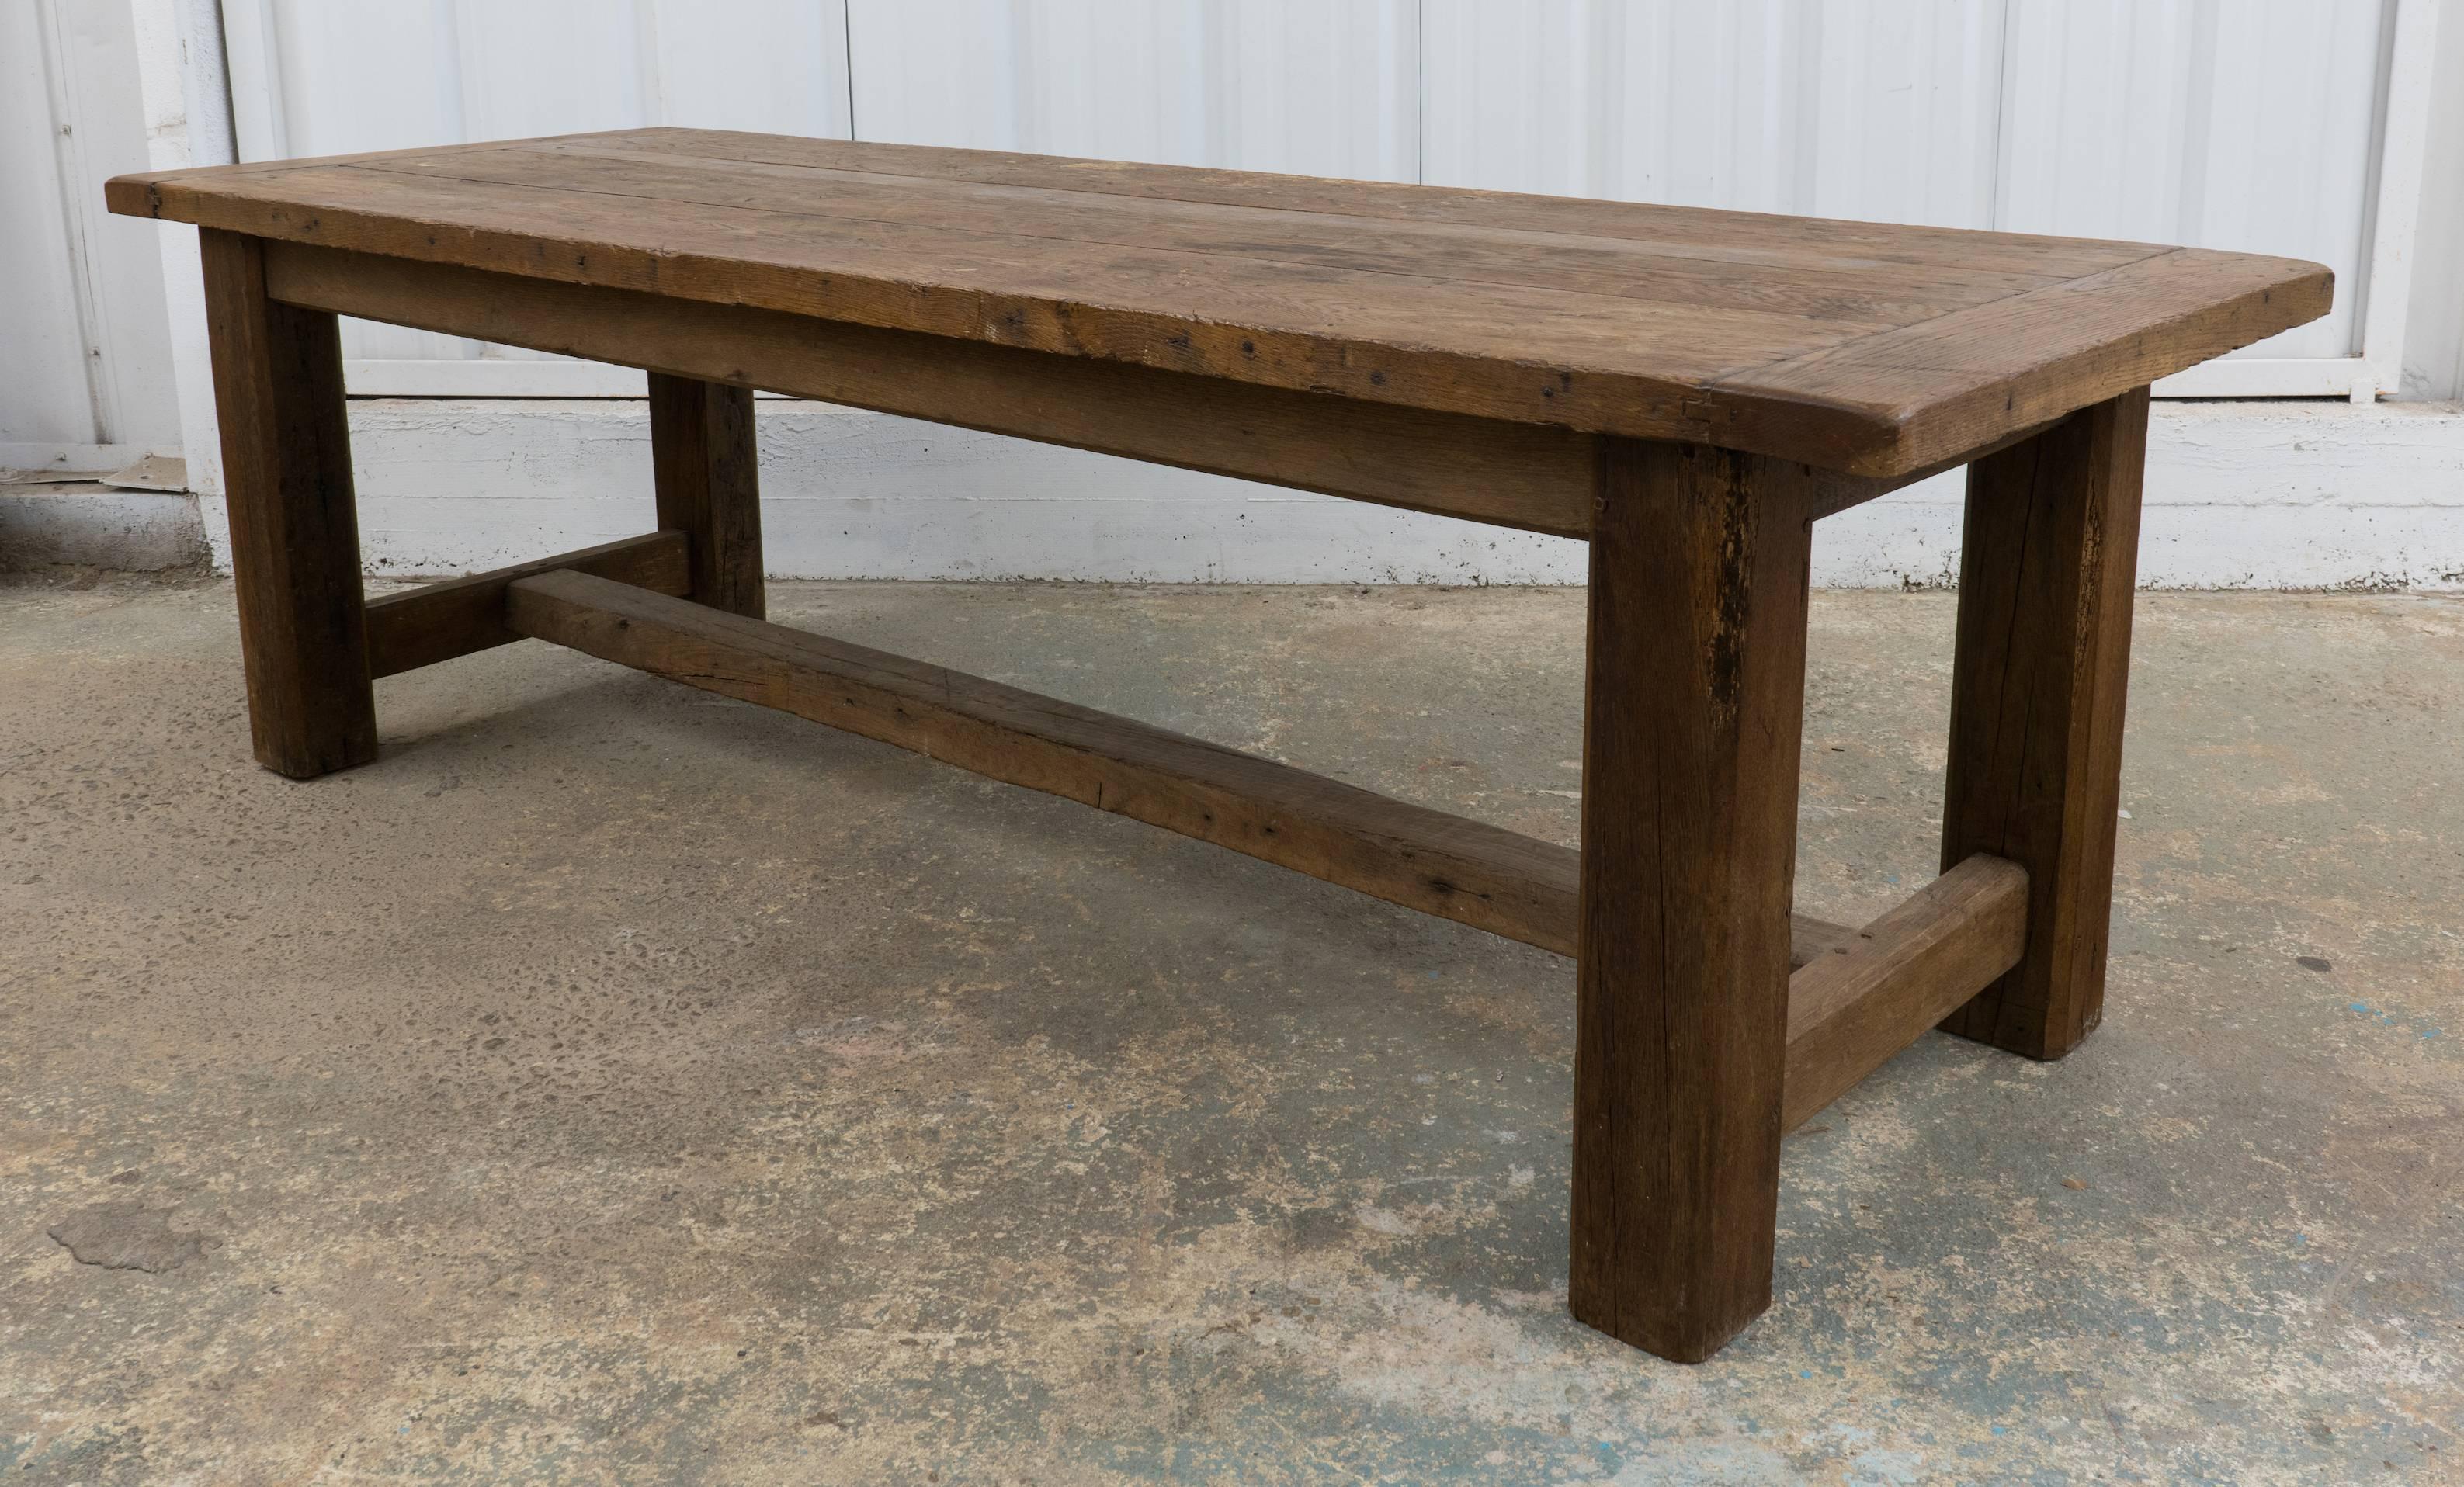 Impressive, sturdy French Industrial oak table in wonderful original condition.